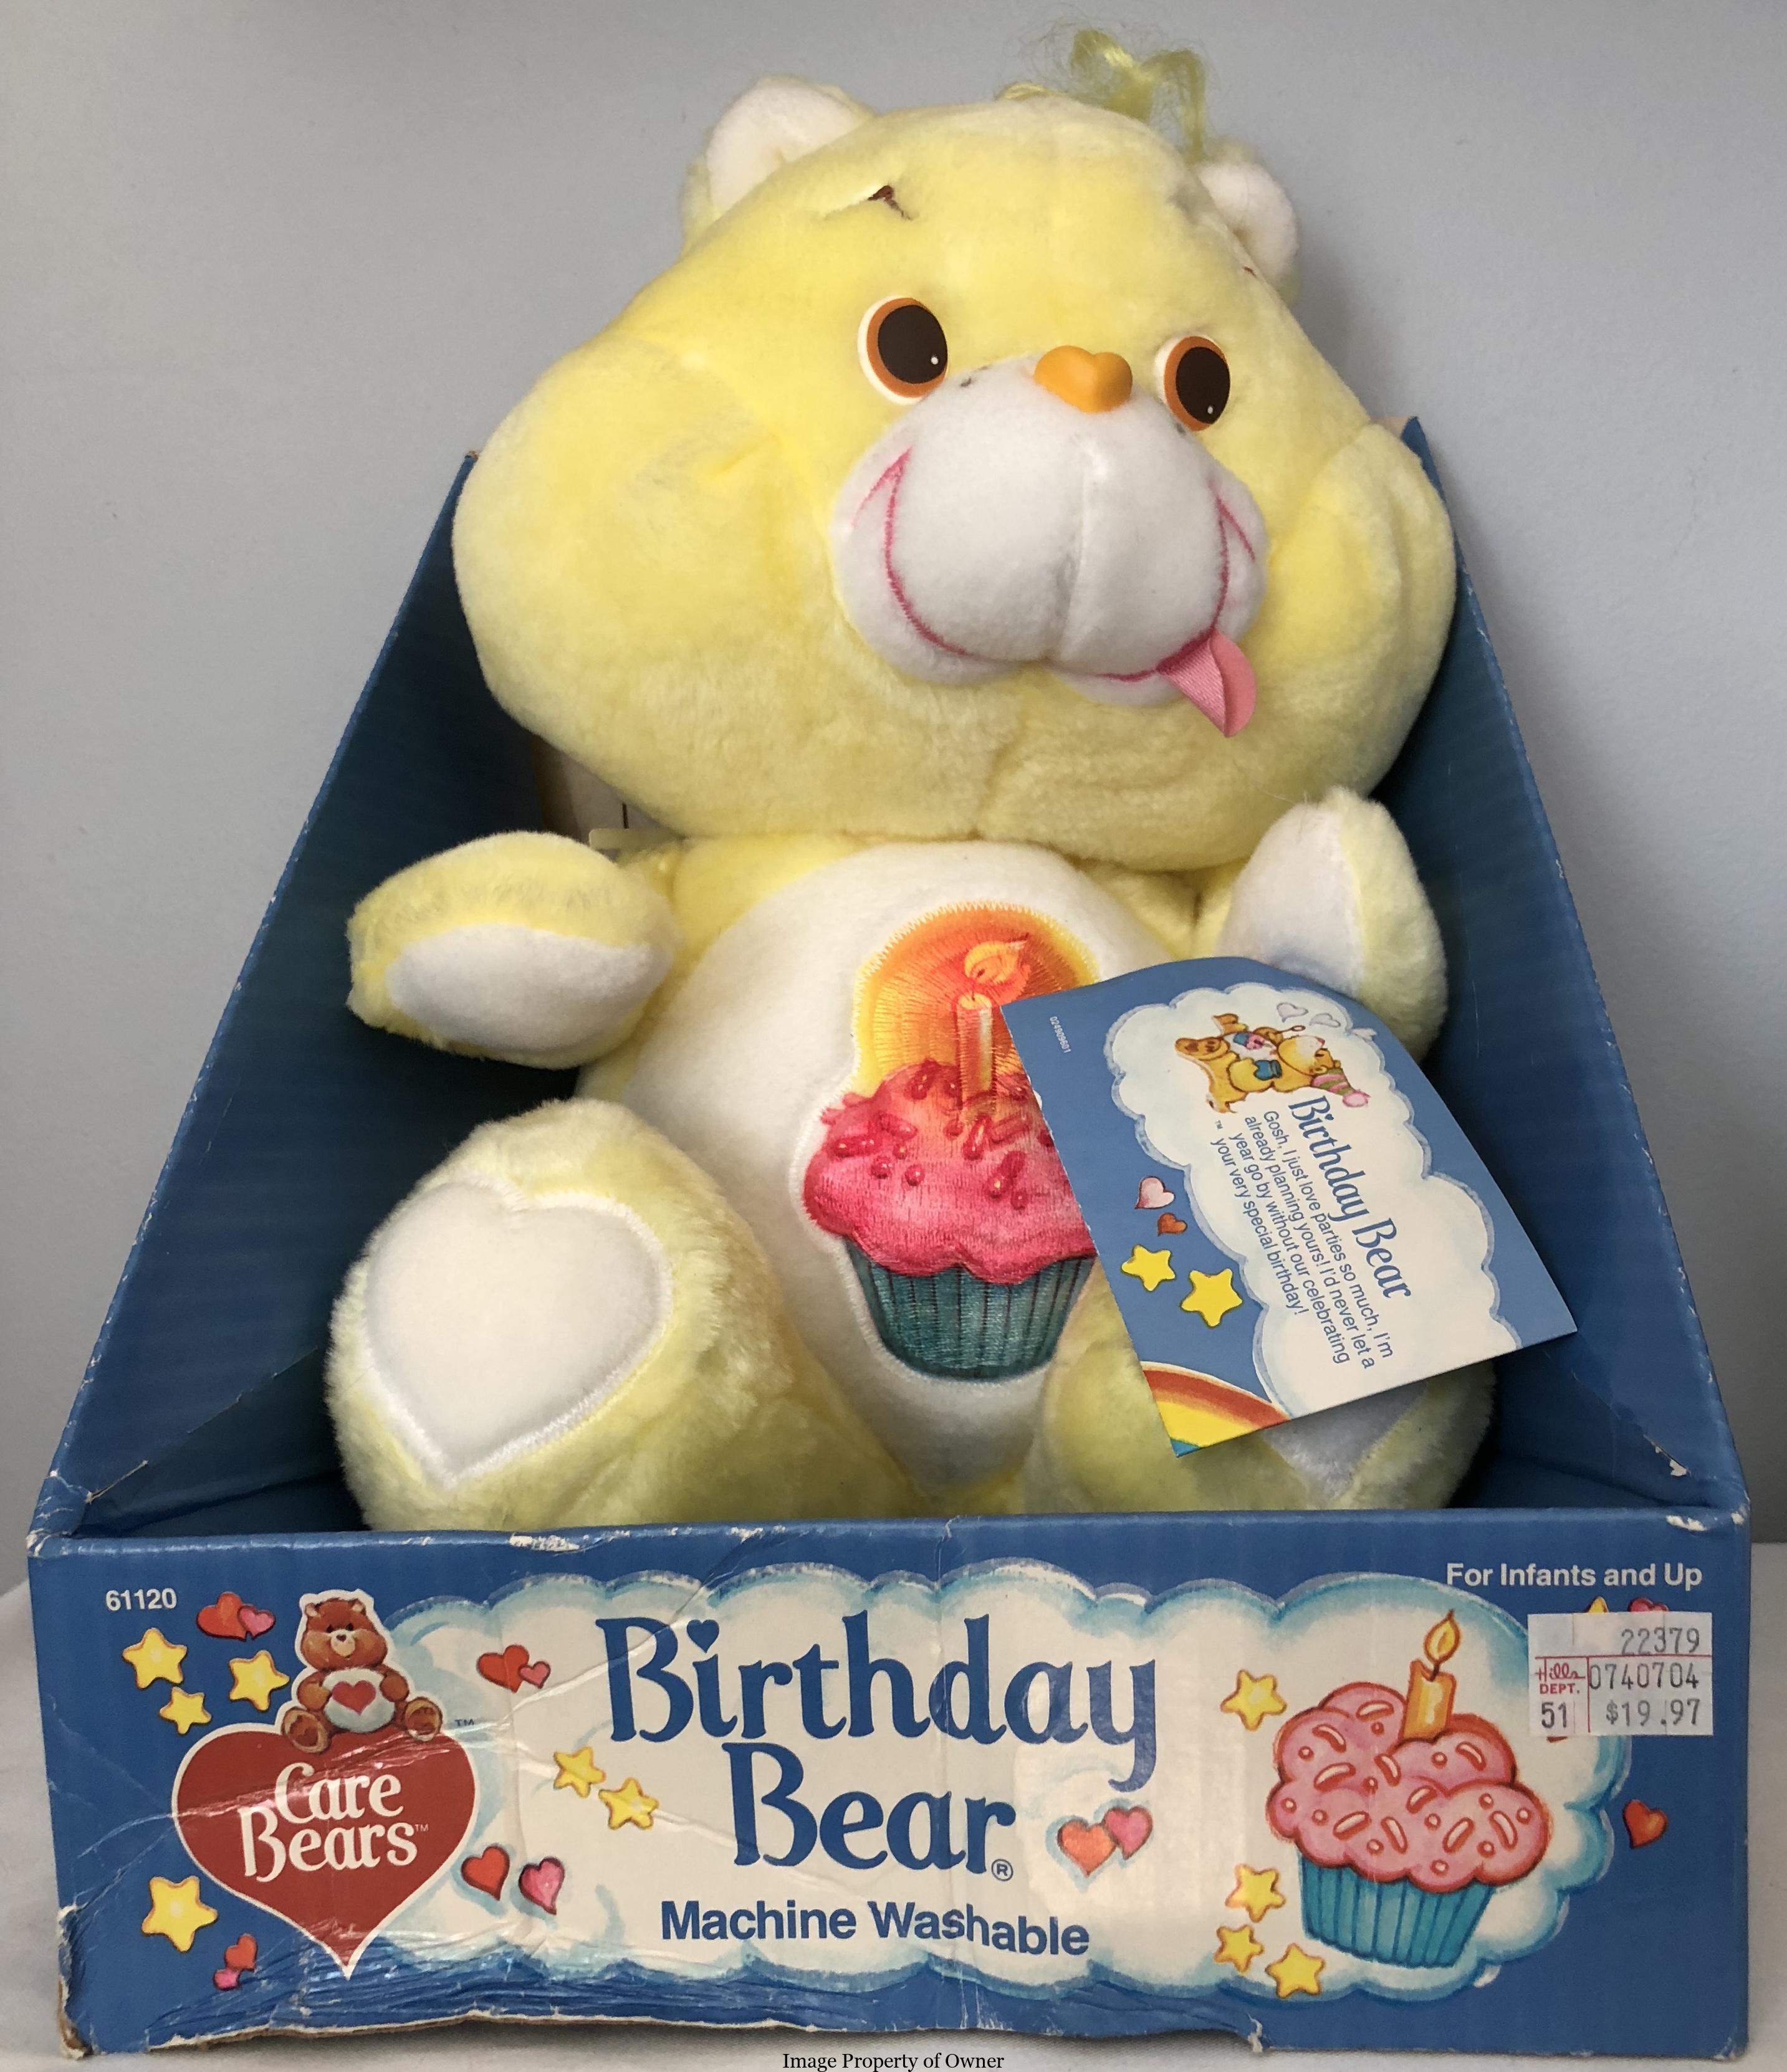 Celebrating with Care Bears Birthday Bear!